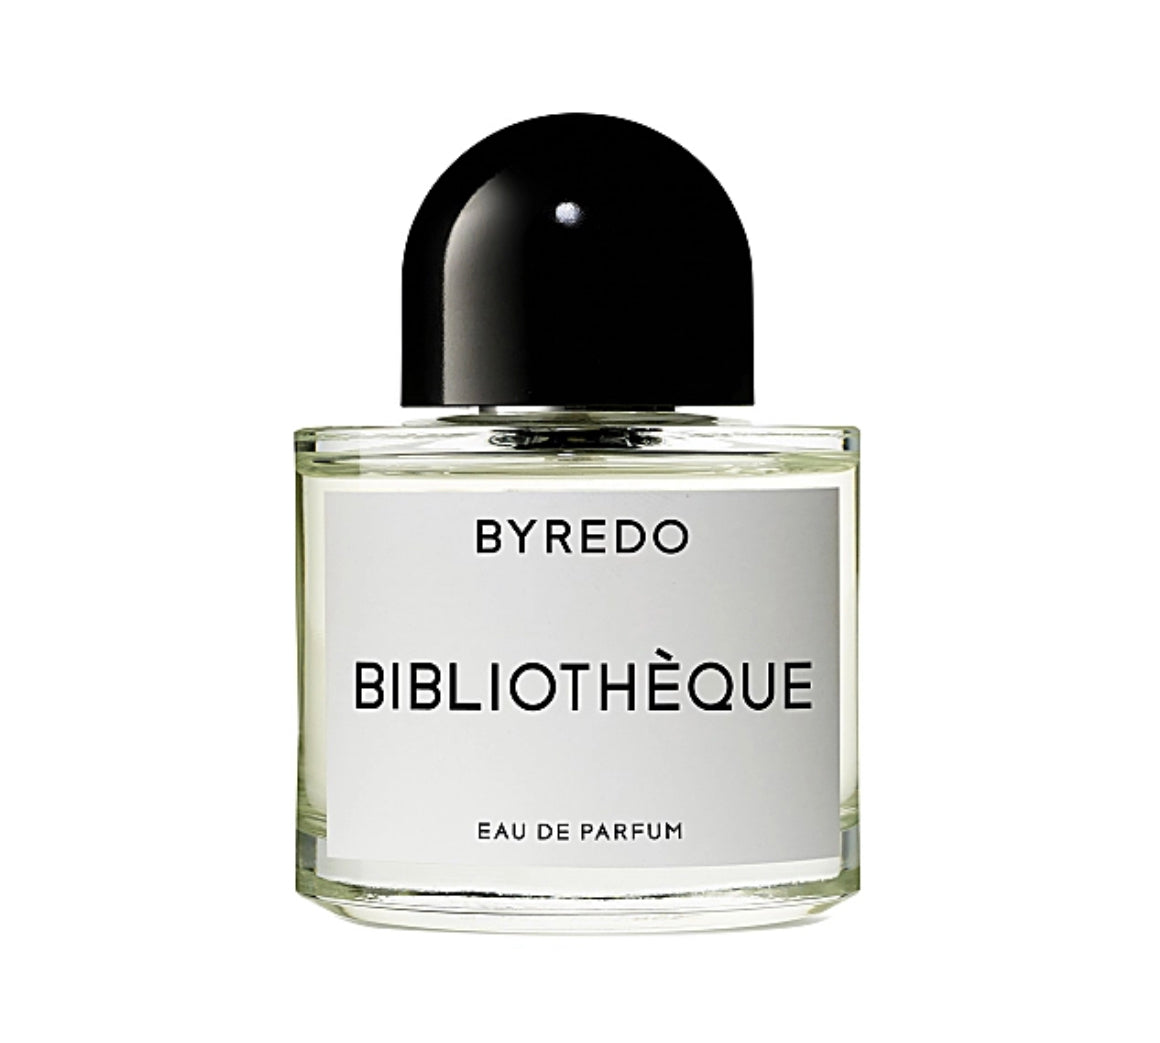 Byredo Bibliothèque EDP Eau De Parfum Samples